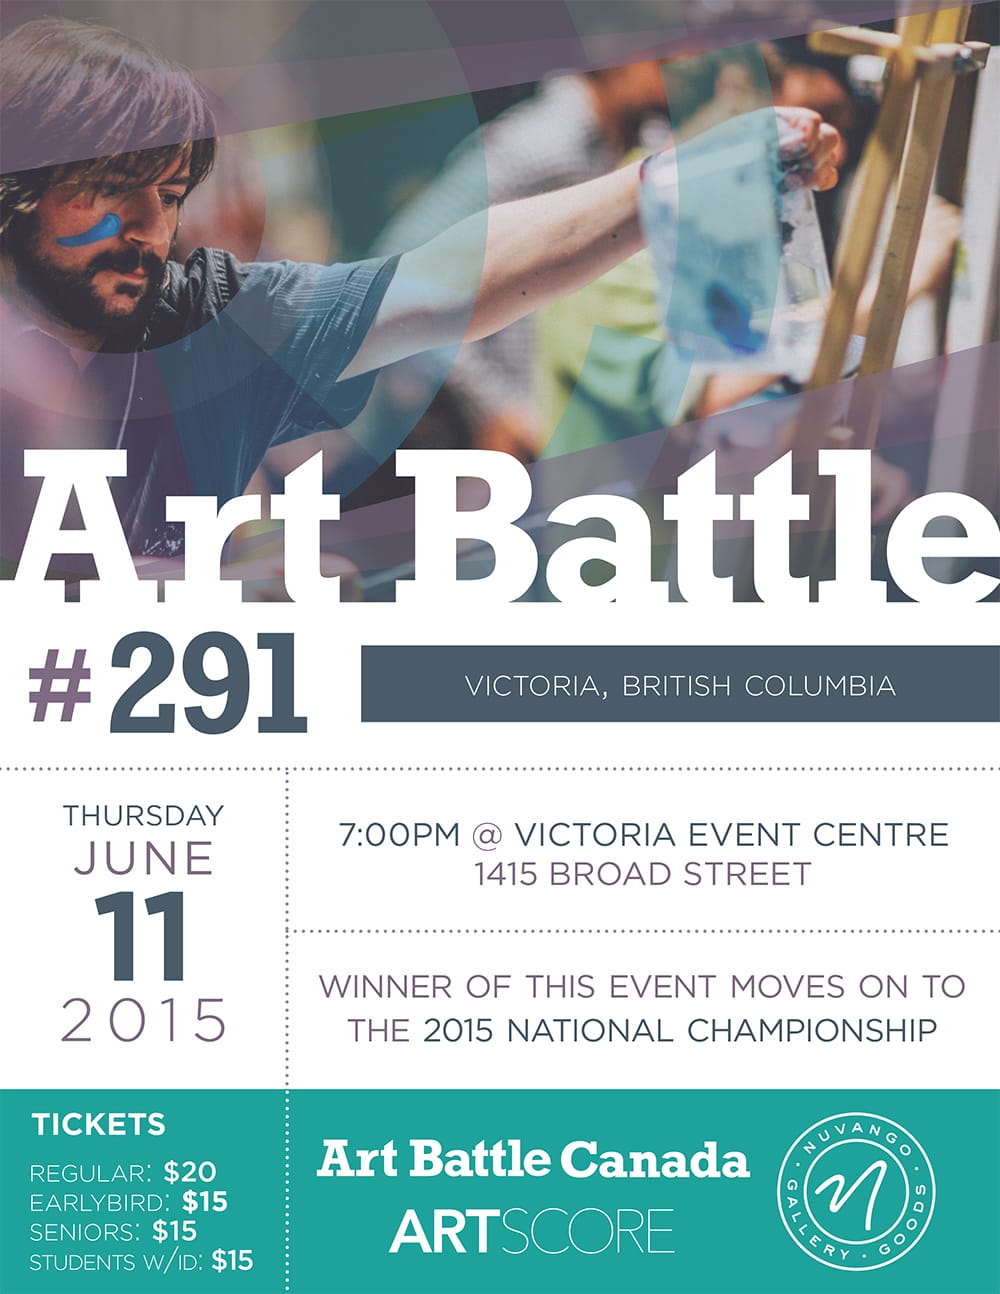 Art Battle 291 - Victoria